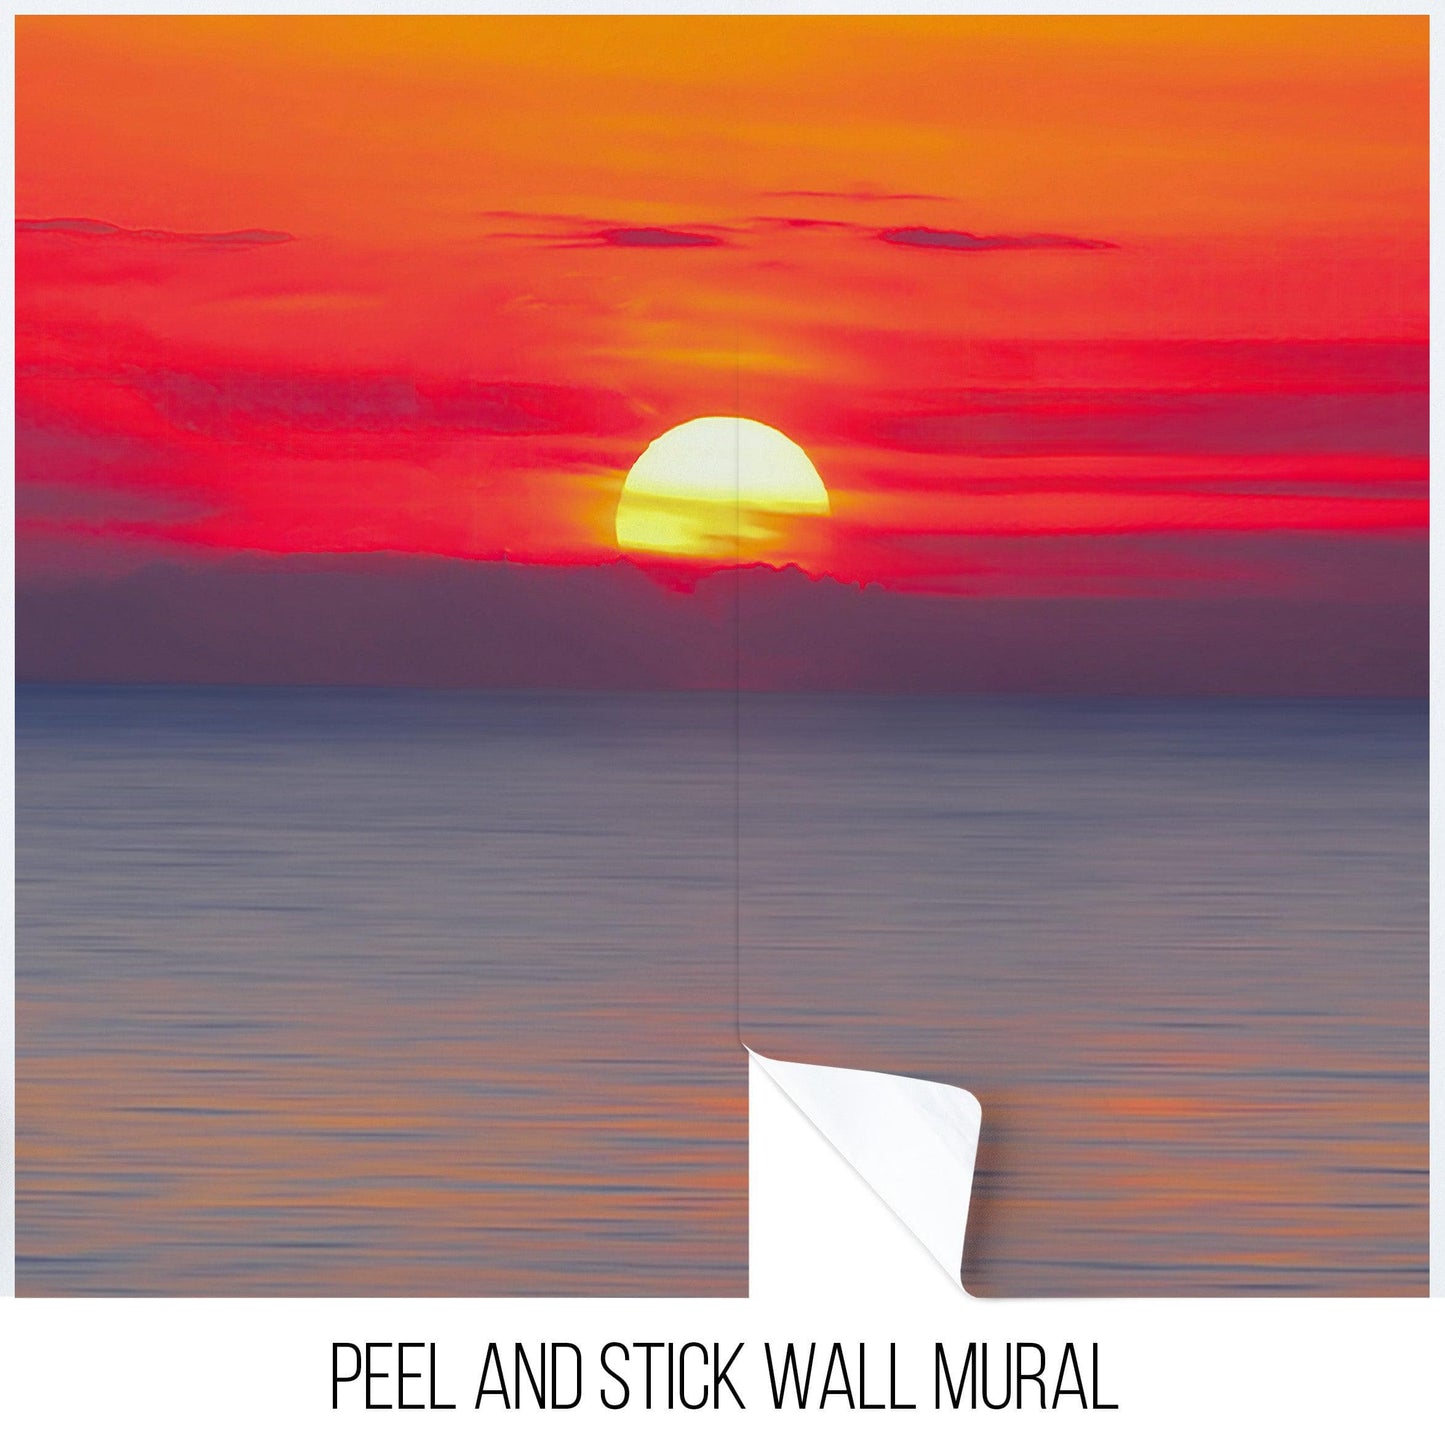 Red Sky Sunset over Beach Wall Mural Decal Sticker #6005